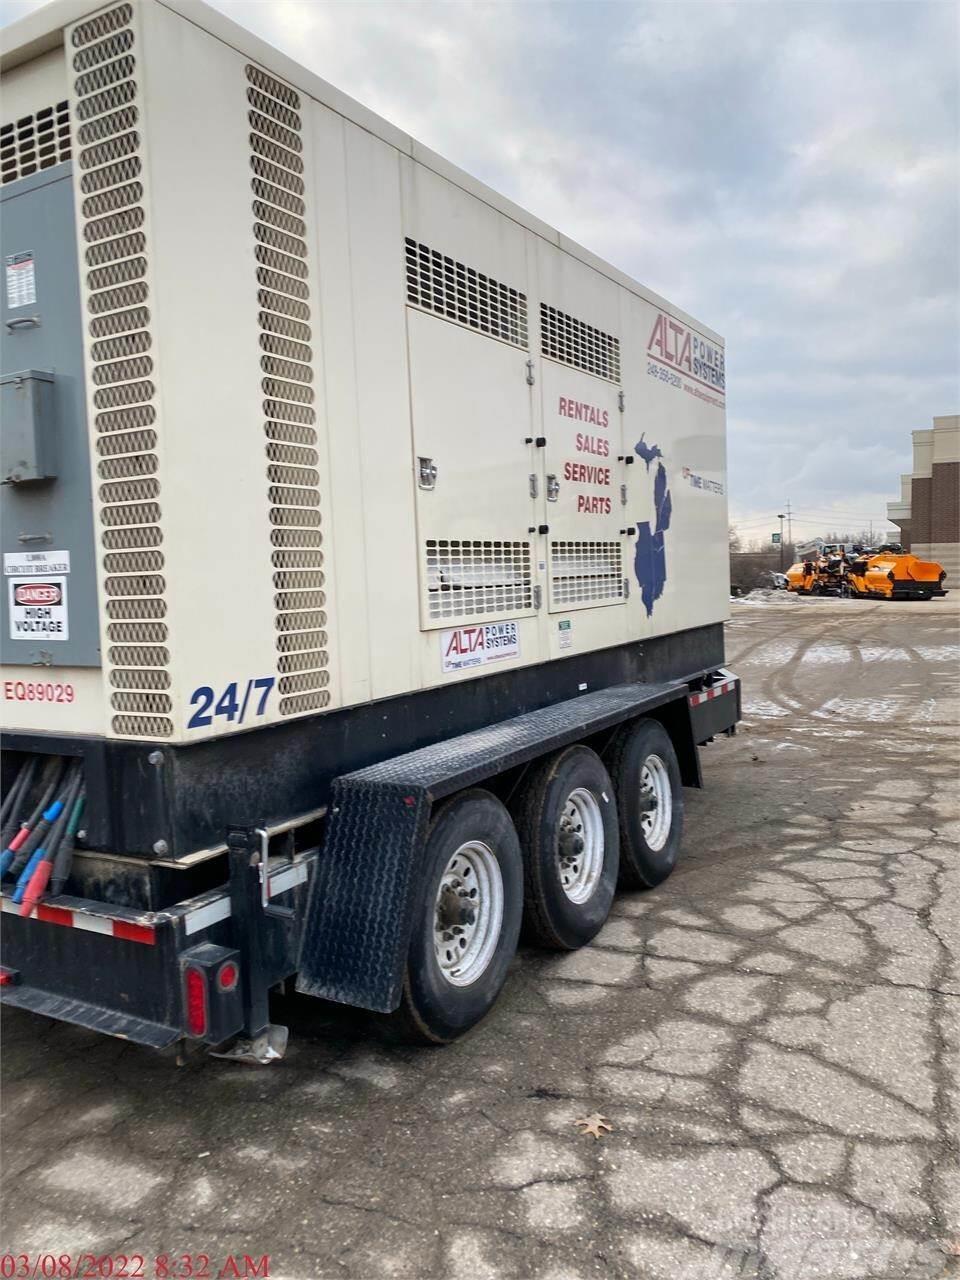  CK POWER 600 KW Andre generatorer